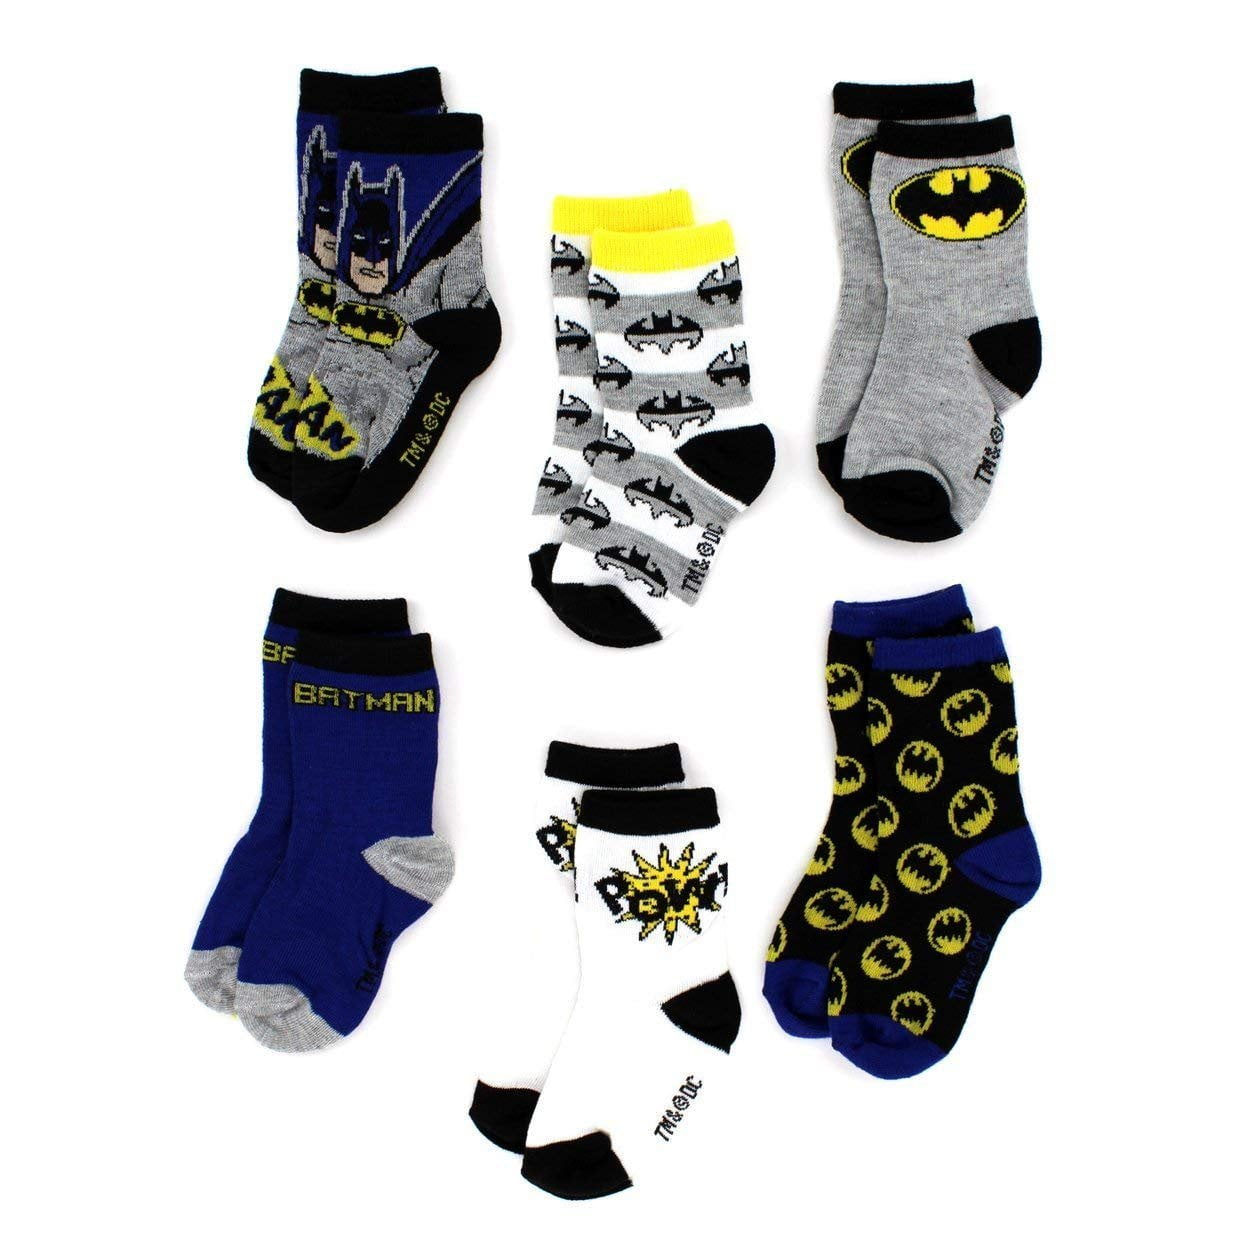 NEW Pack of 3 DC COMICS  Batman Kids Toddler Boys Socks 1-3 Years Blue/Navy 